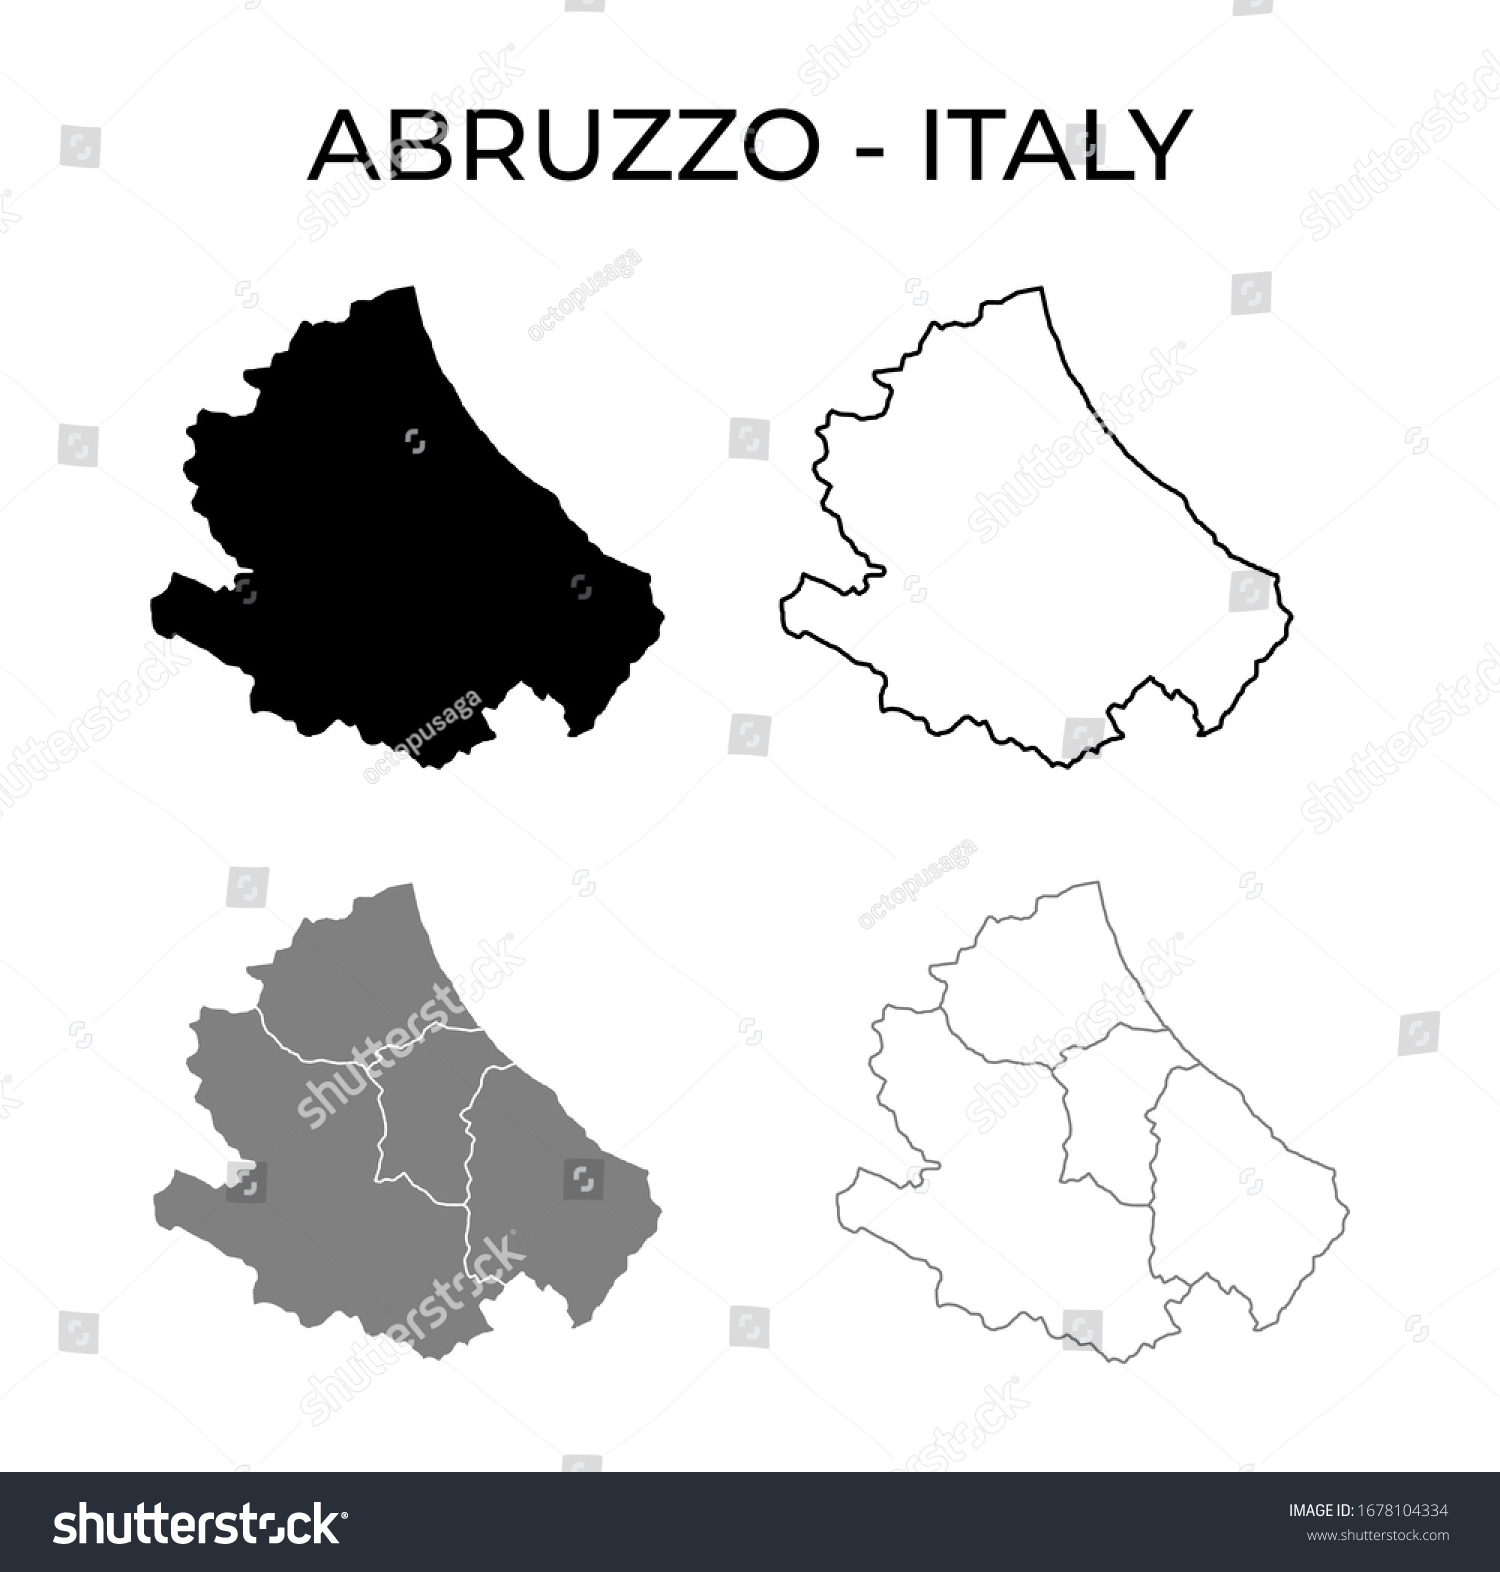 Sticker car flag map country province region italy abruzzo